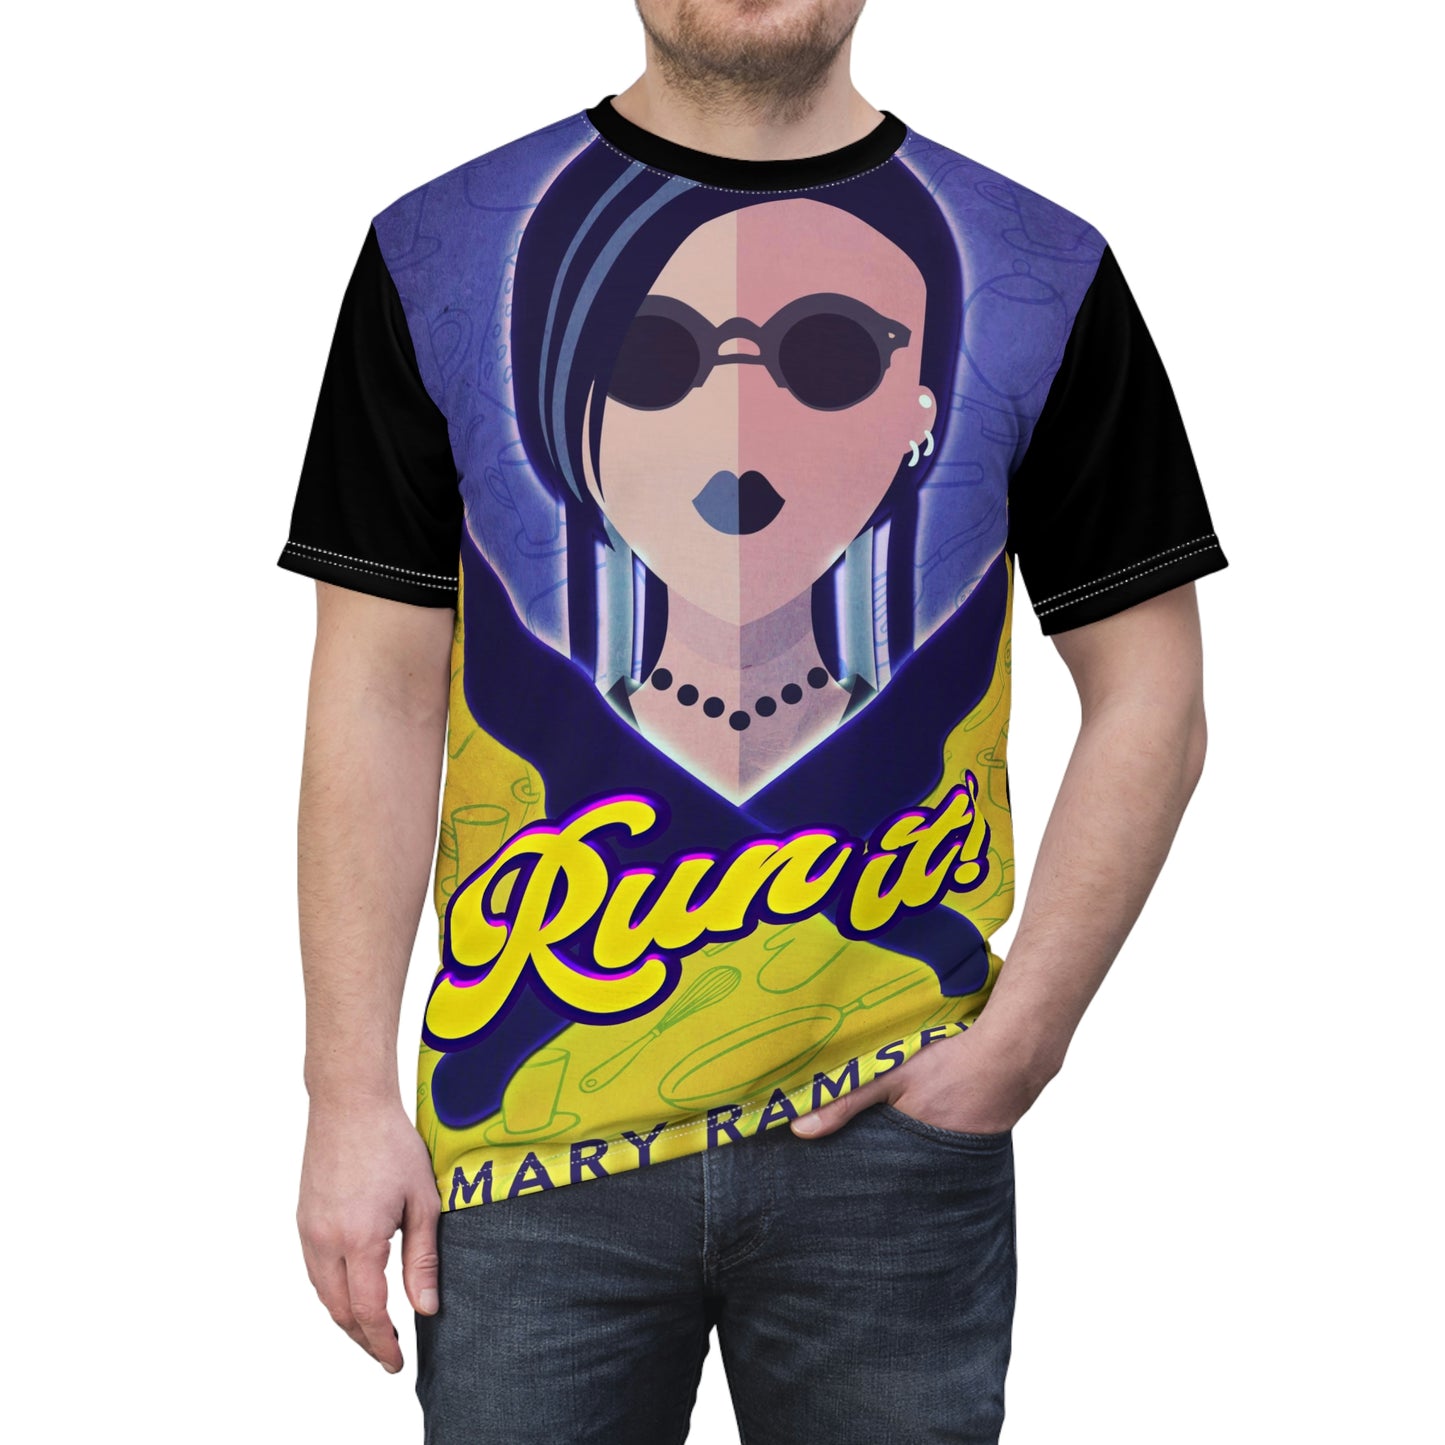 Run It! - Unisex All-Over Print Cut & Sew T-Shirt